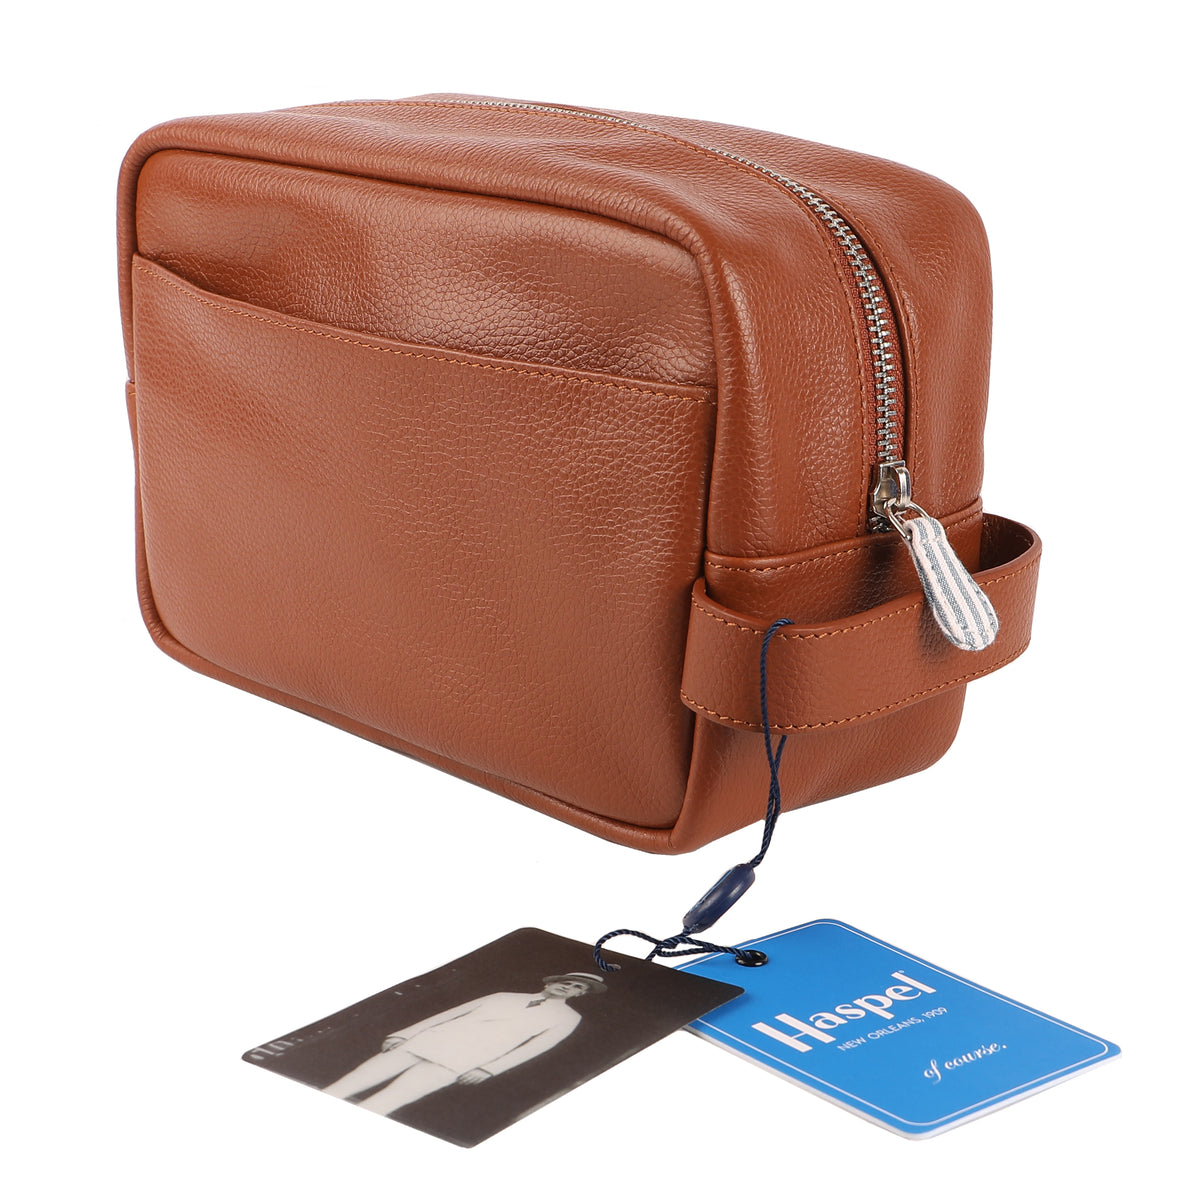 Leather British Tan Travel Kit